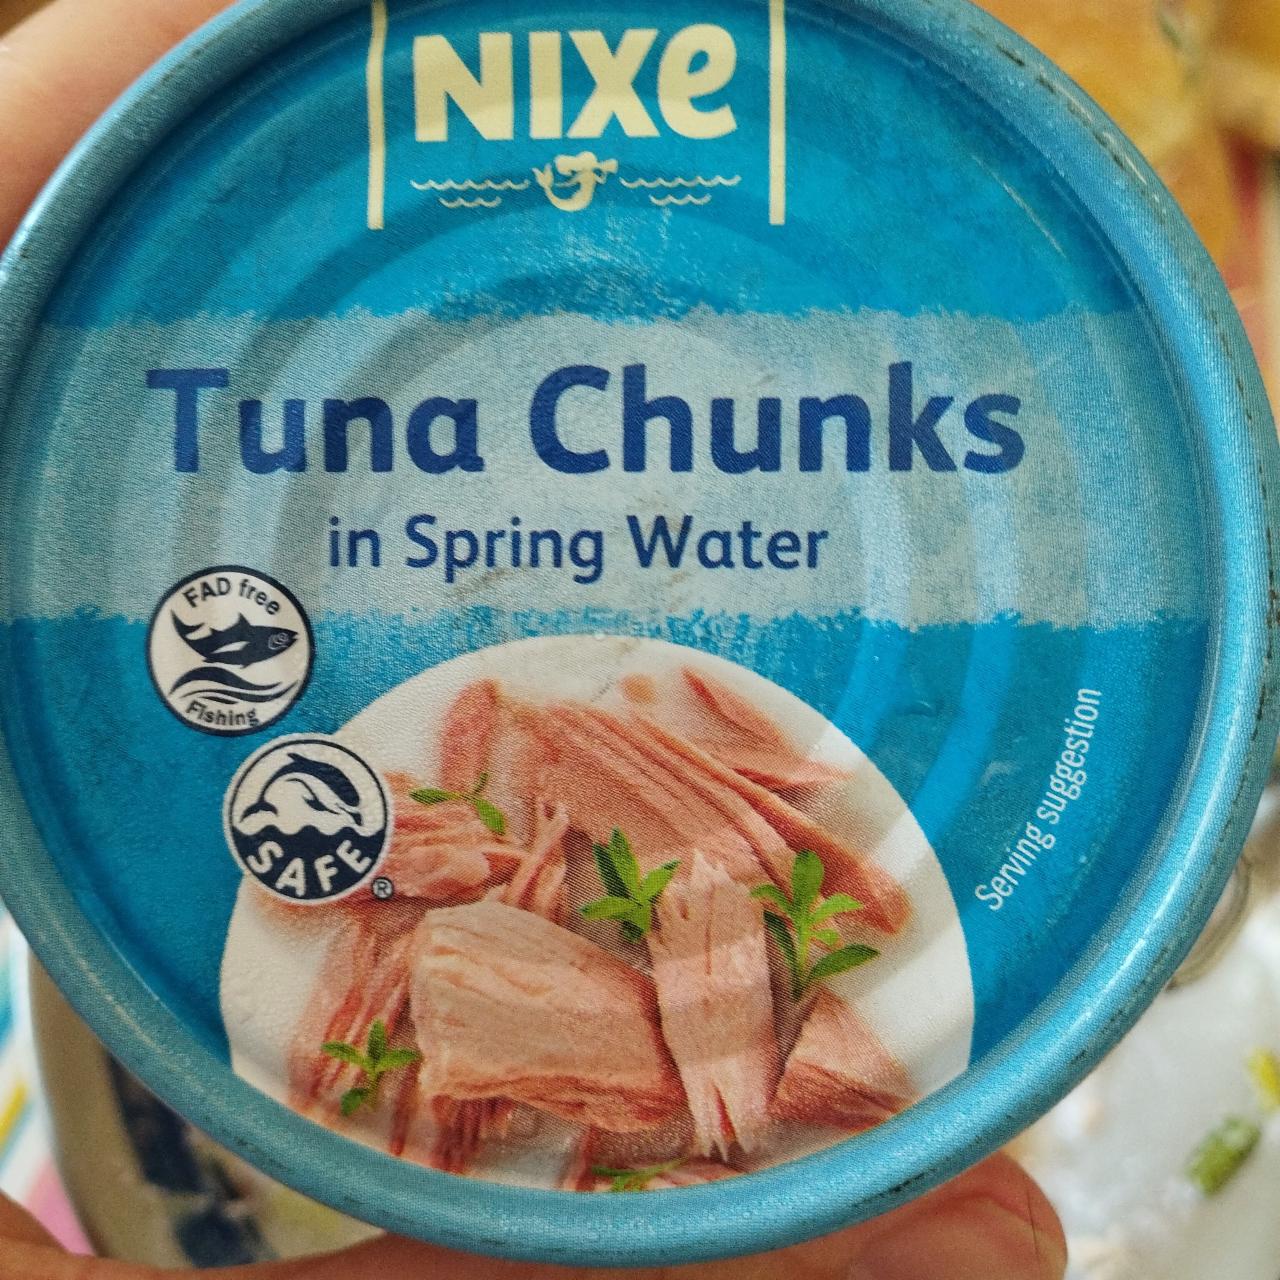 Fotografie - Tuna Chunks in Spring Water Nixe